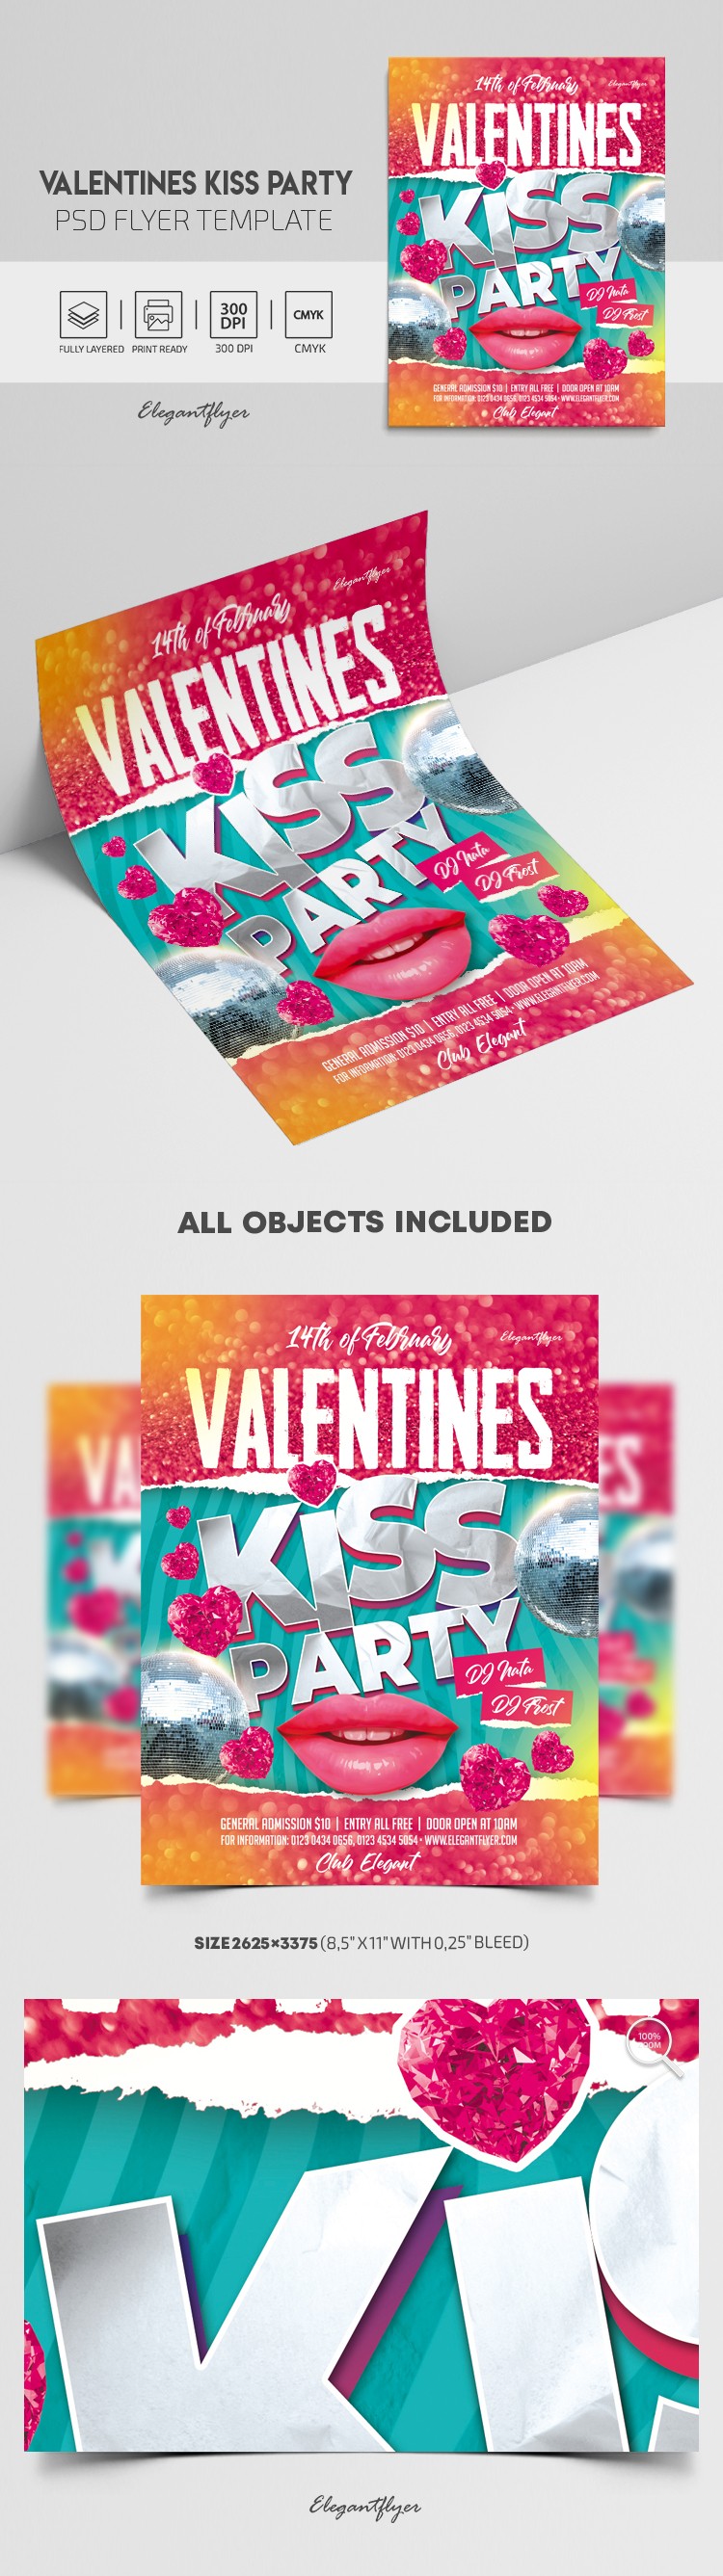 Flyer per la festa del bacio di San Valentino. by ElegantFlyer